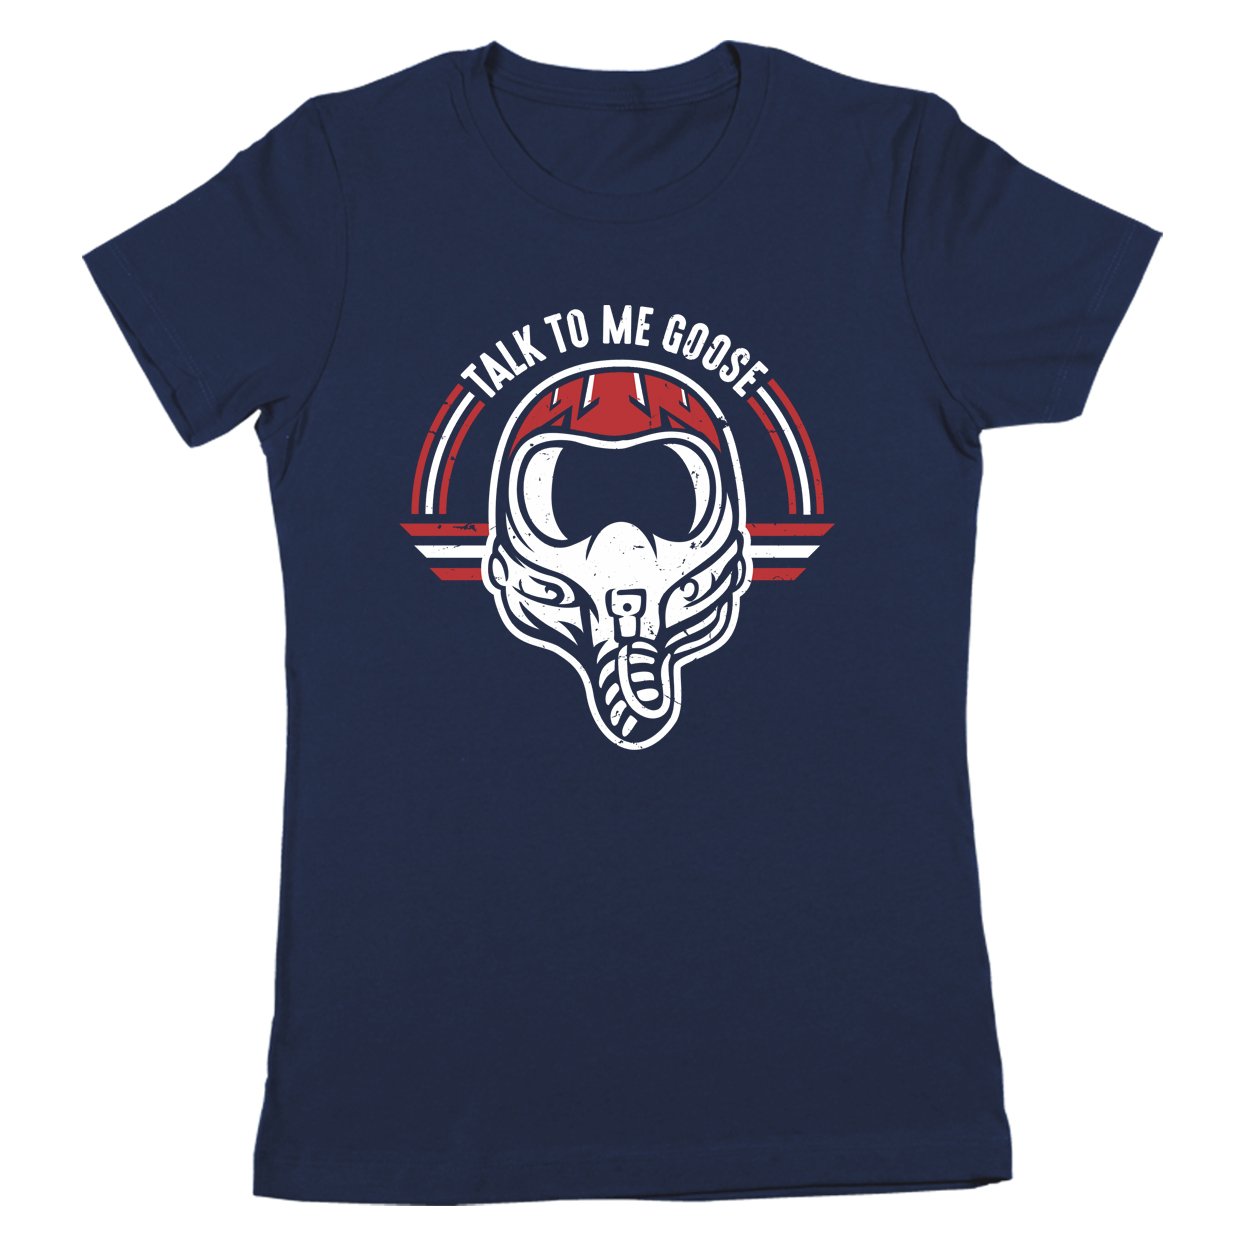 Talk To Me Goose Women's Fit T-Shirt